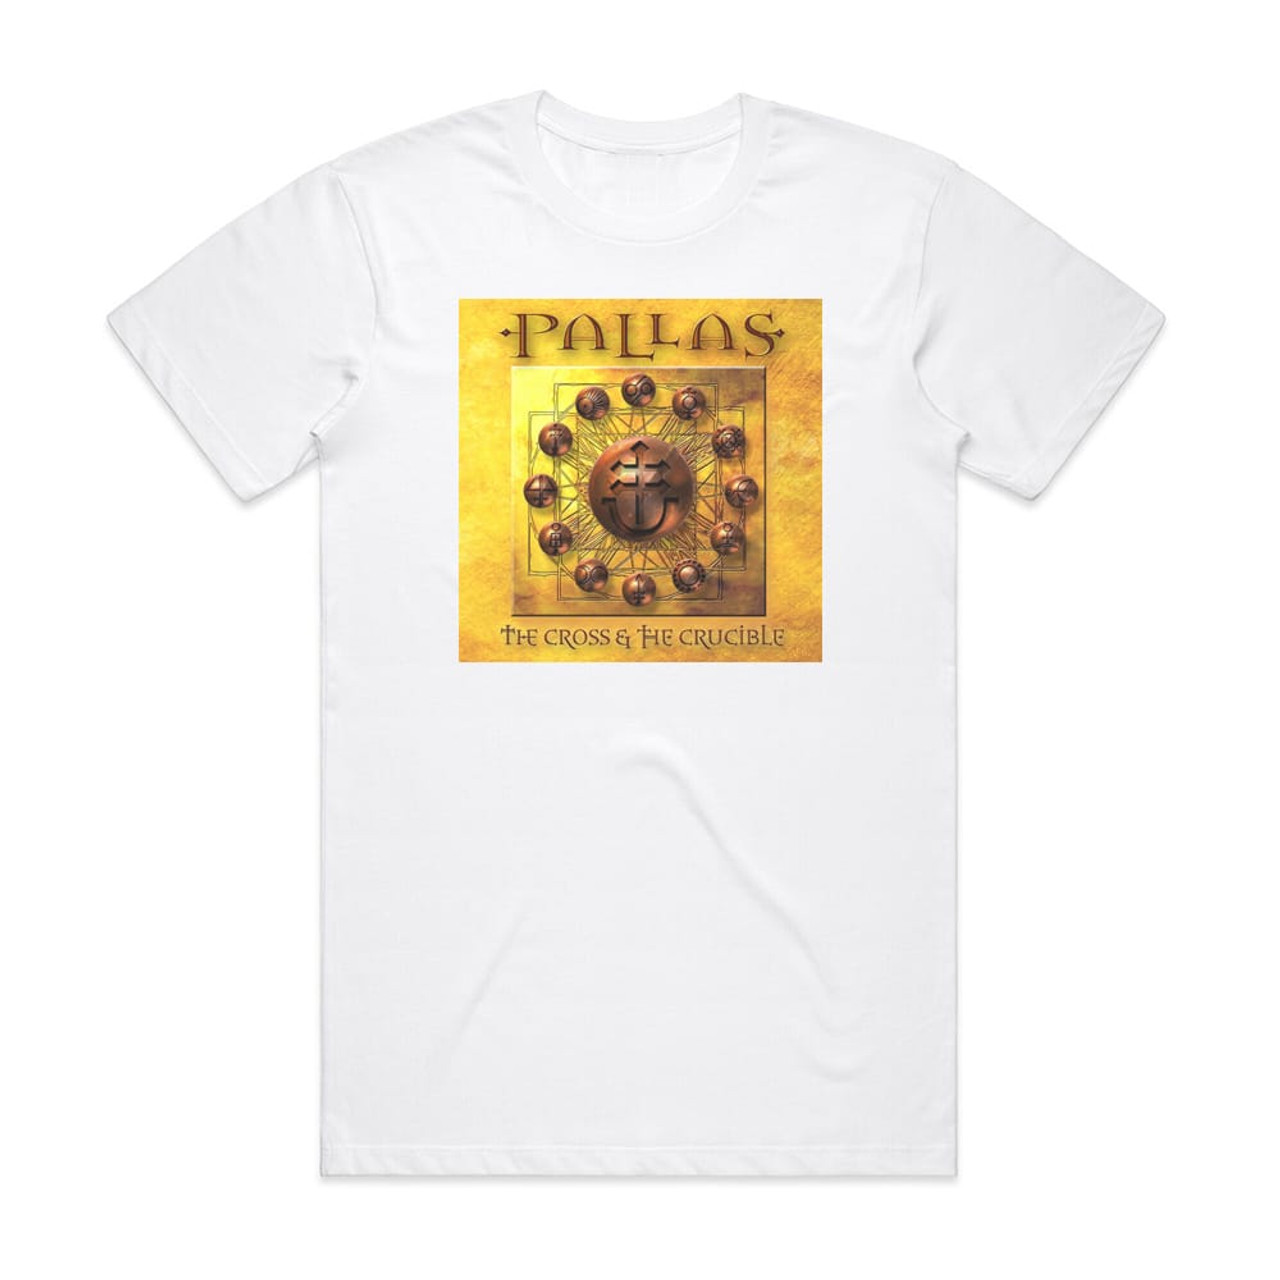 Pallas The Cross The Crucible Album Cover T-Shirt White